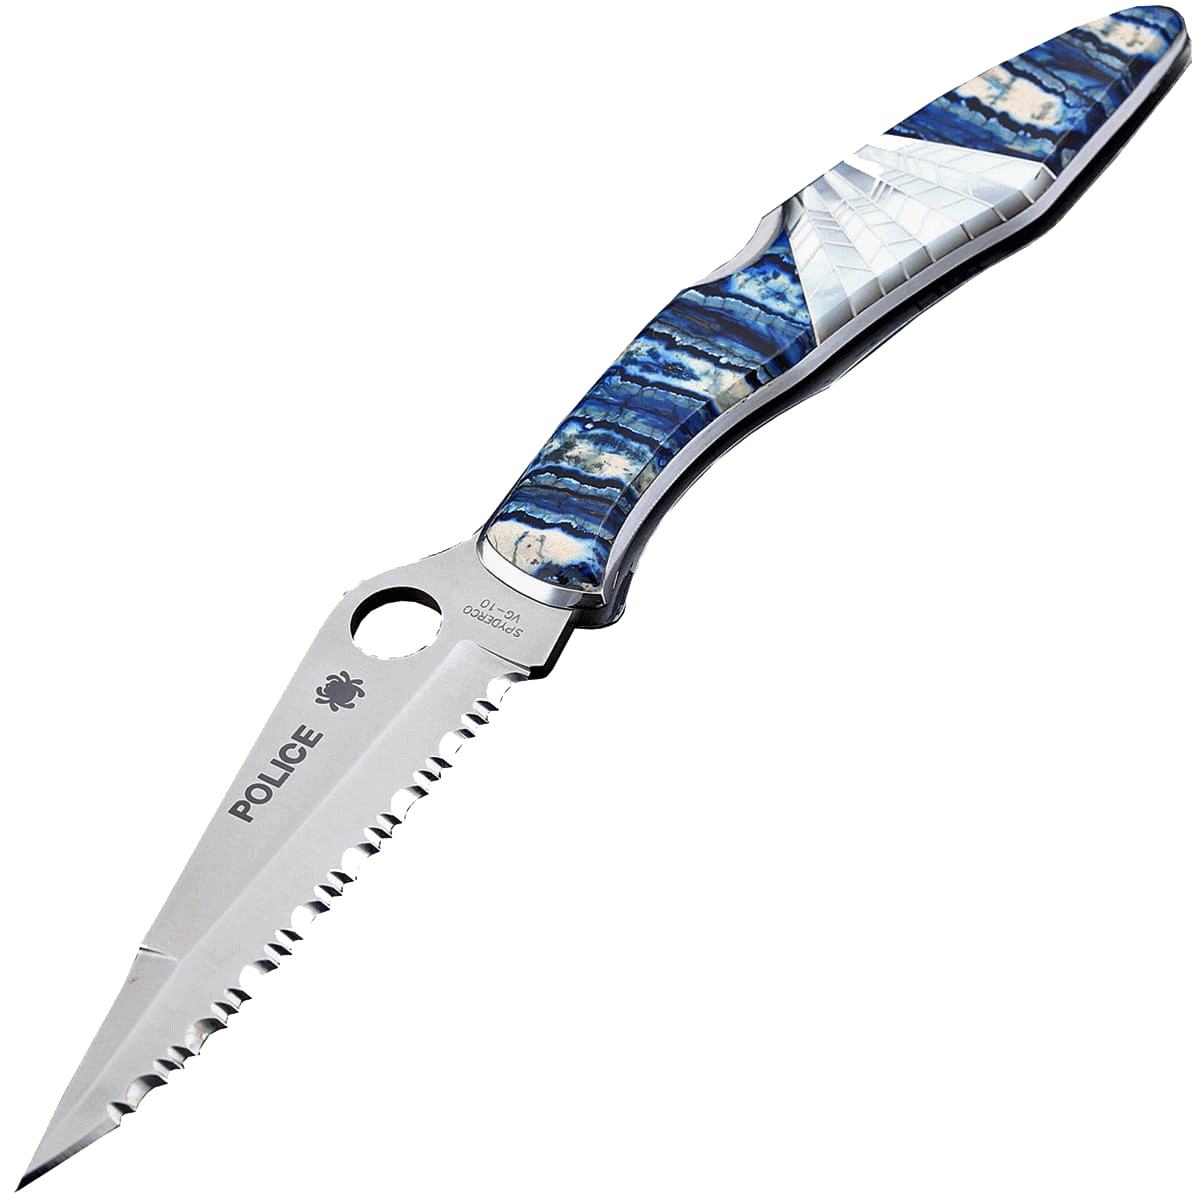 Складной нож Santa Fe Spyderco Police Serrated, сталь VG-10, рукоять сталь с накладкой из зуба мамонта/перламутра